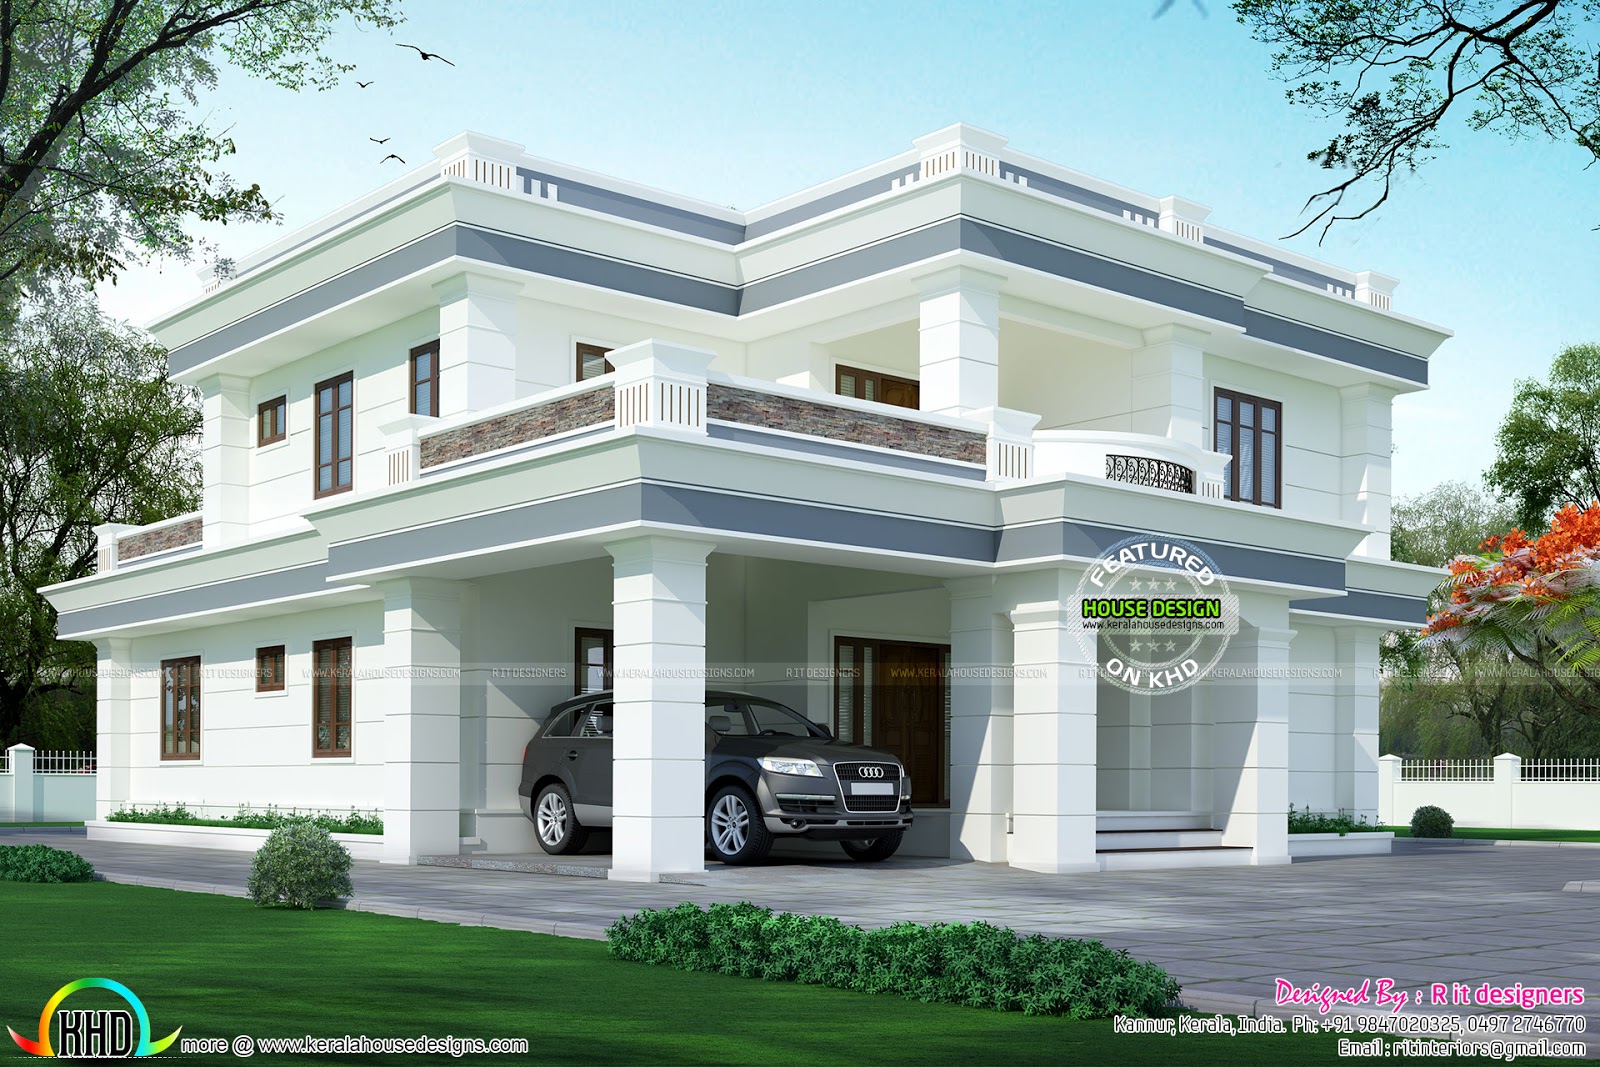  Modern  flat roof house  in 395 sq yd Kerala  home  design  